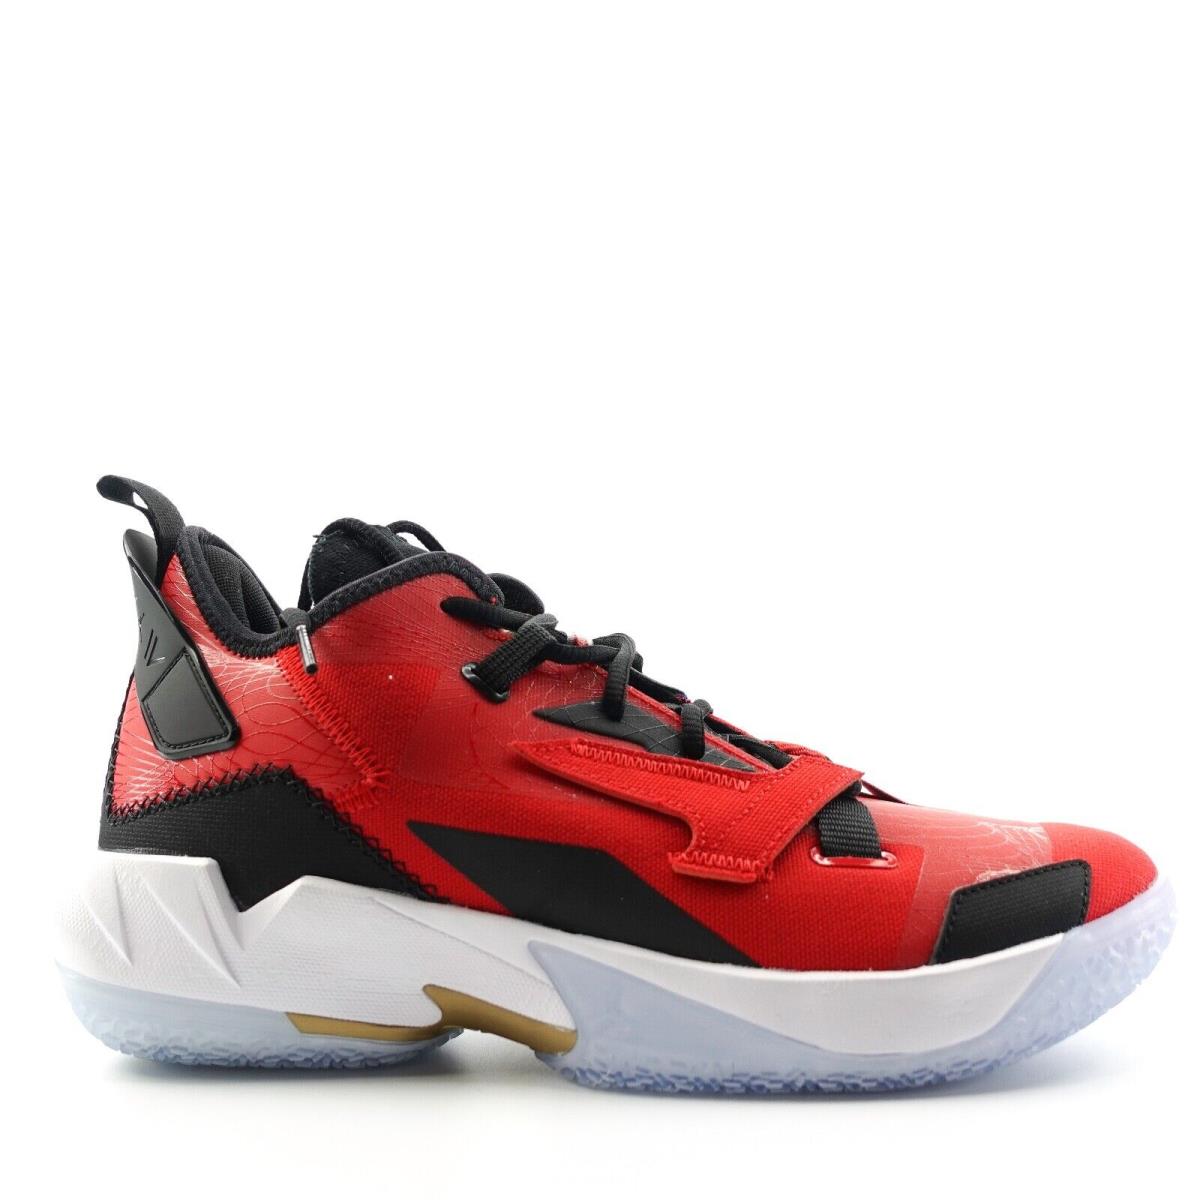 Nike Jordan Why Not Zer0.4 PF Red White Basketball Shoe DD4886-600 Mens Size 10